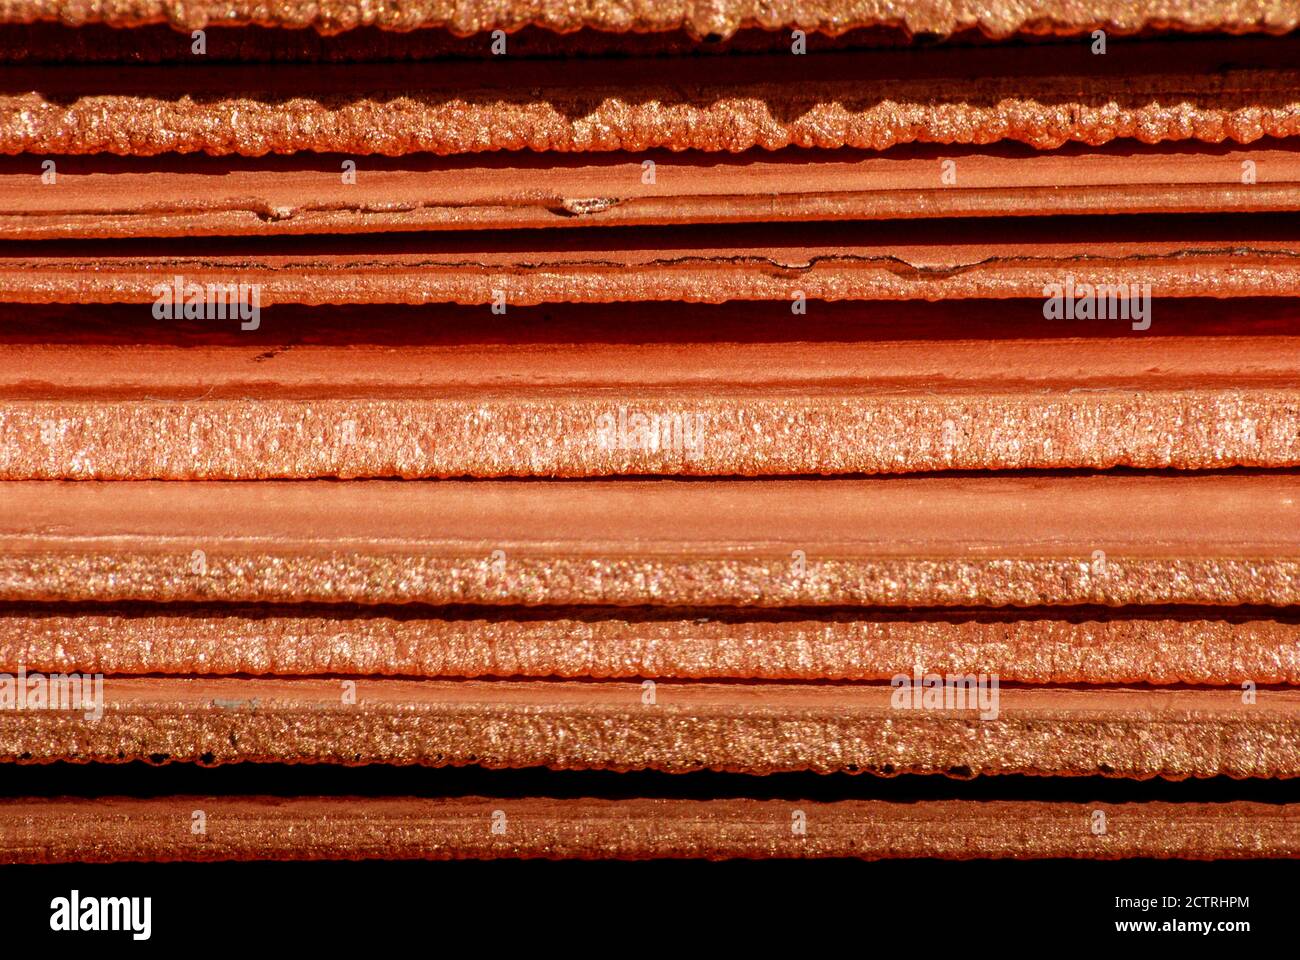 Copper mining operations in Antofagasta region, Chile Stock Photo